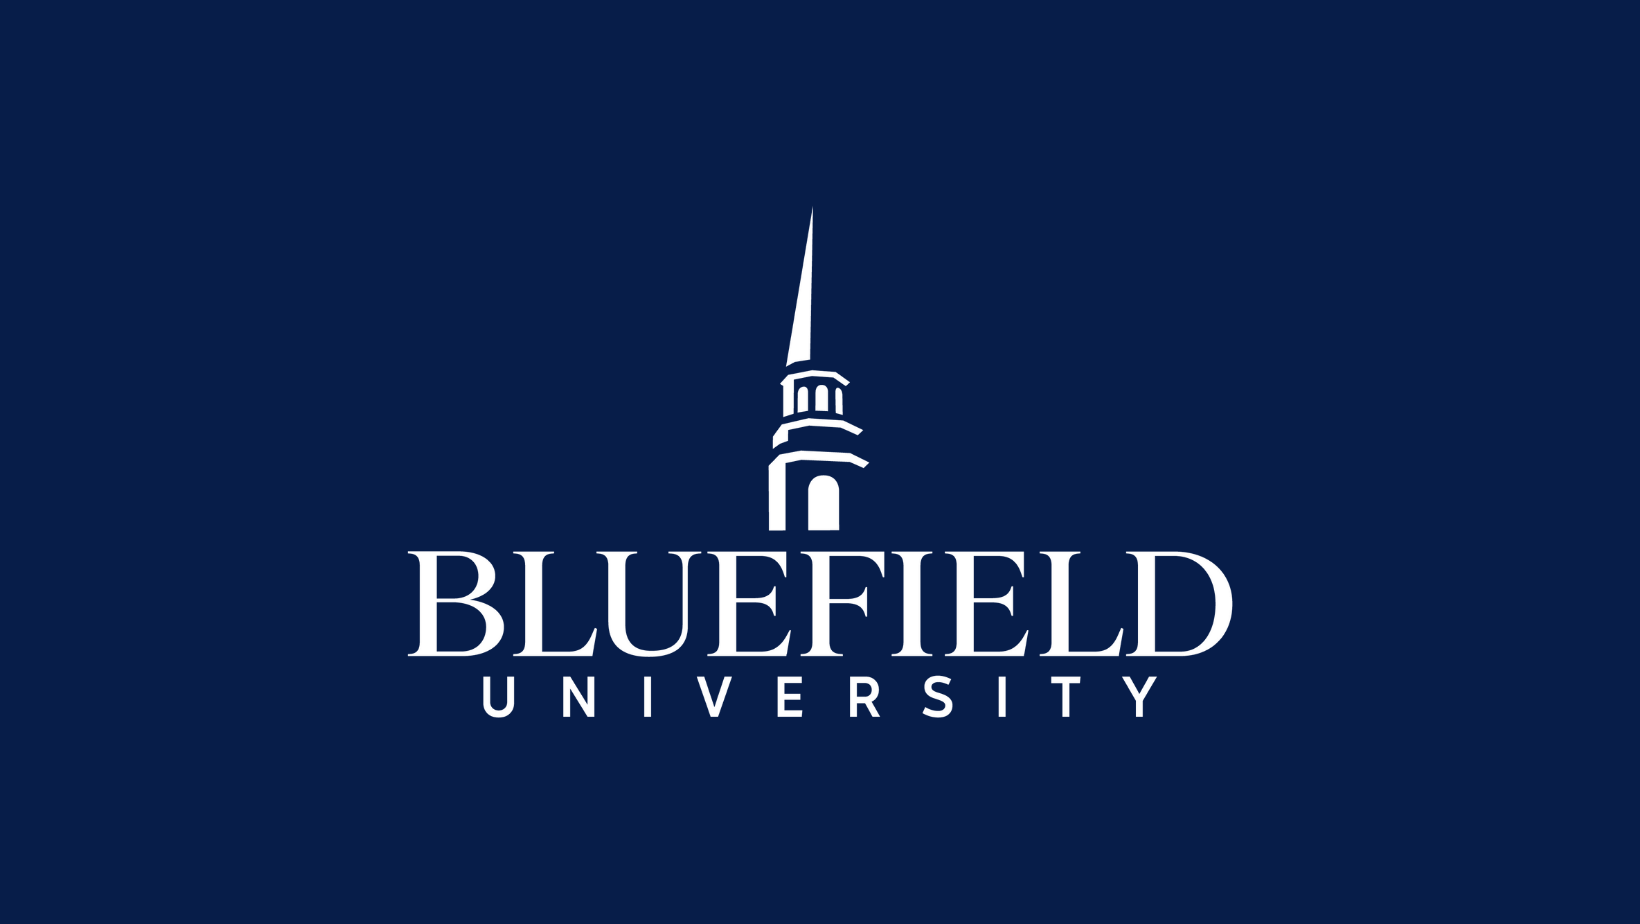 Bluefield University logo.